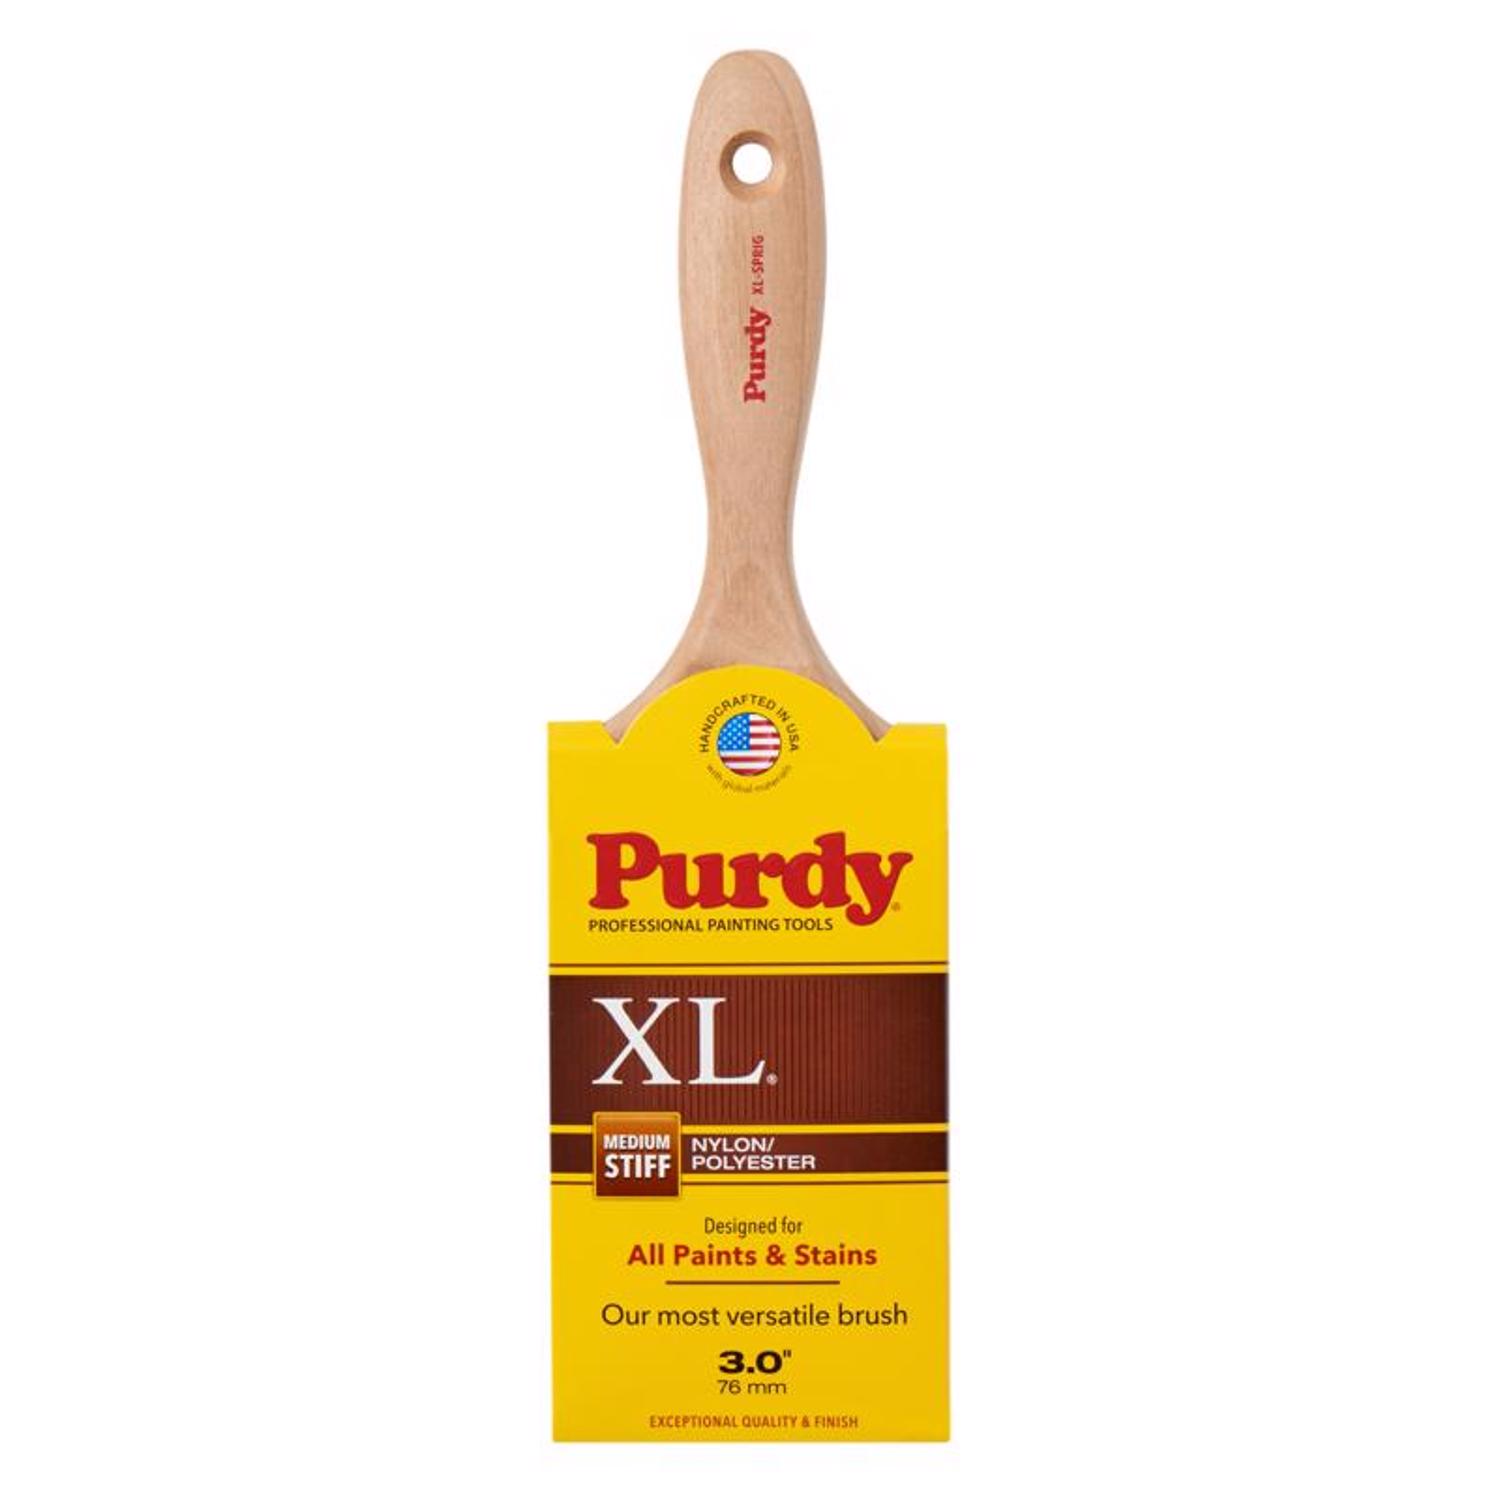 Photos - Putty Knife / Painting Tool Purdy XL Sprig 3 in. Medium Stiff Flat Trim Paint Brush 144380330